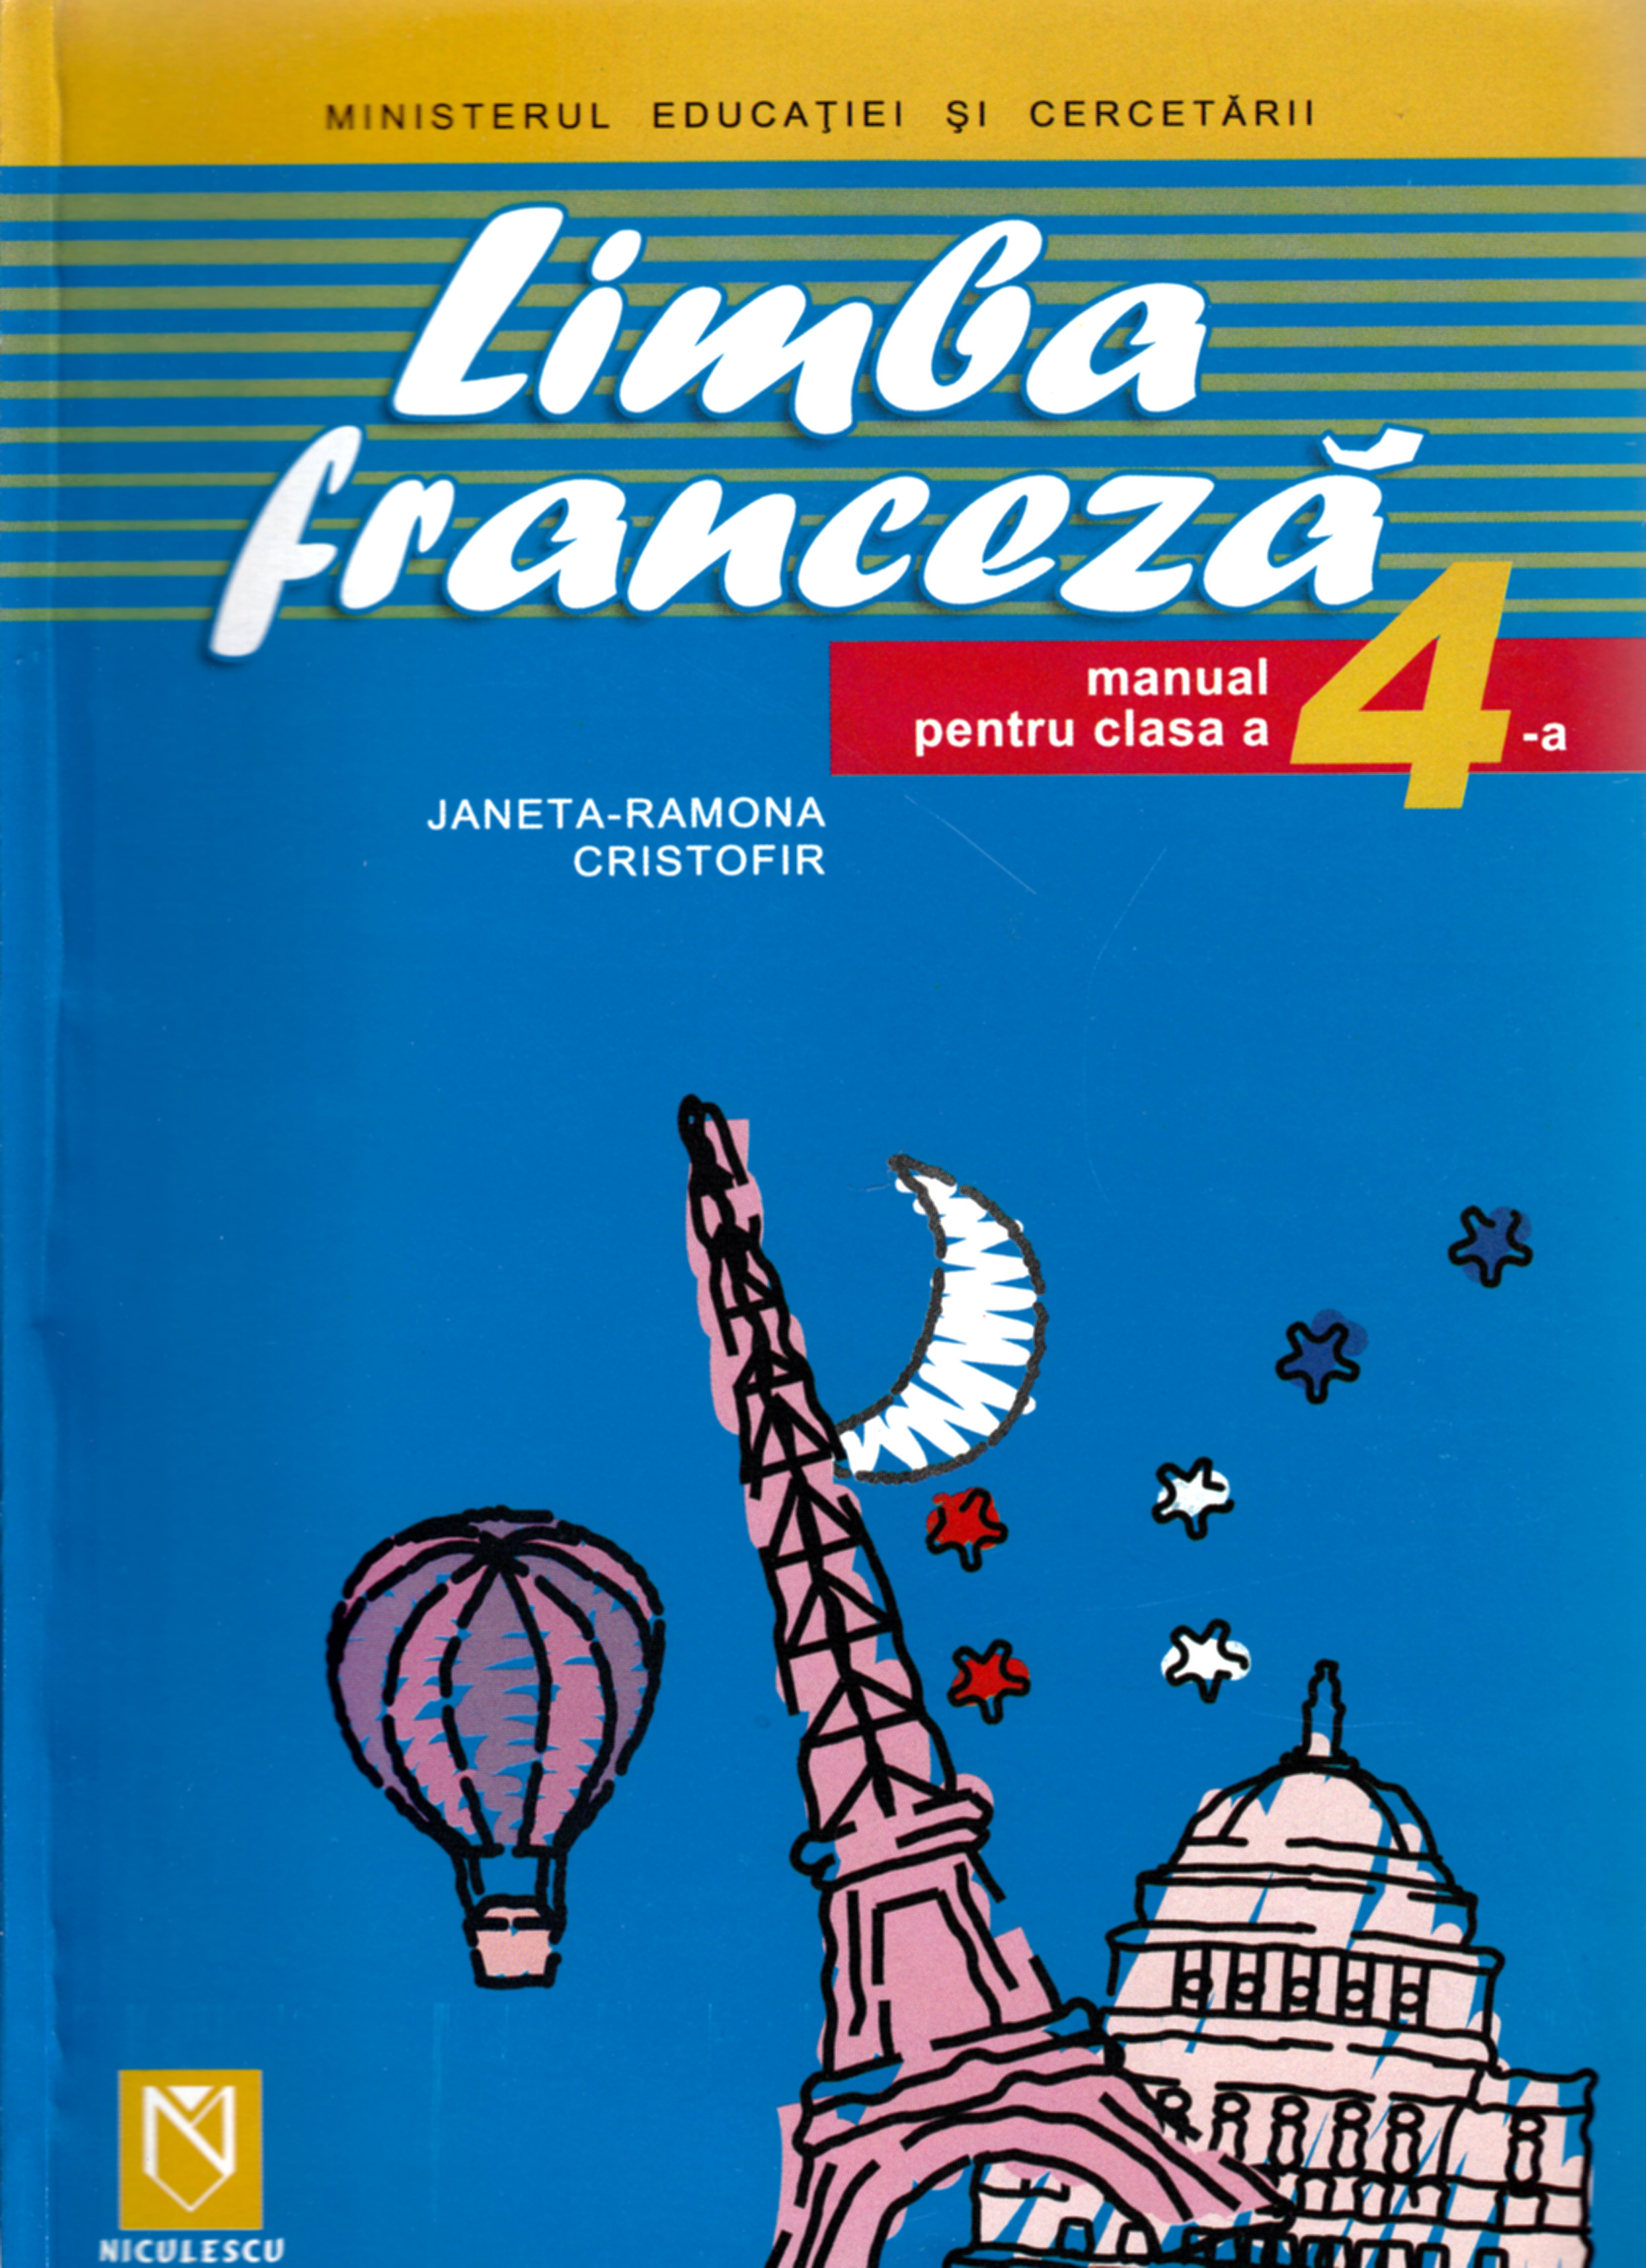 Franceza clasa 4 - Janeta-Ramona Cristofir